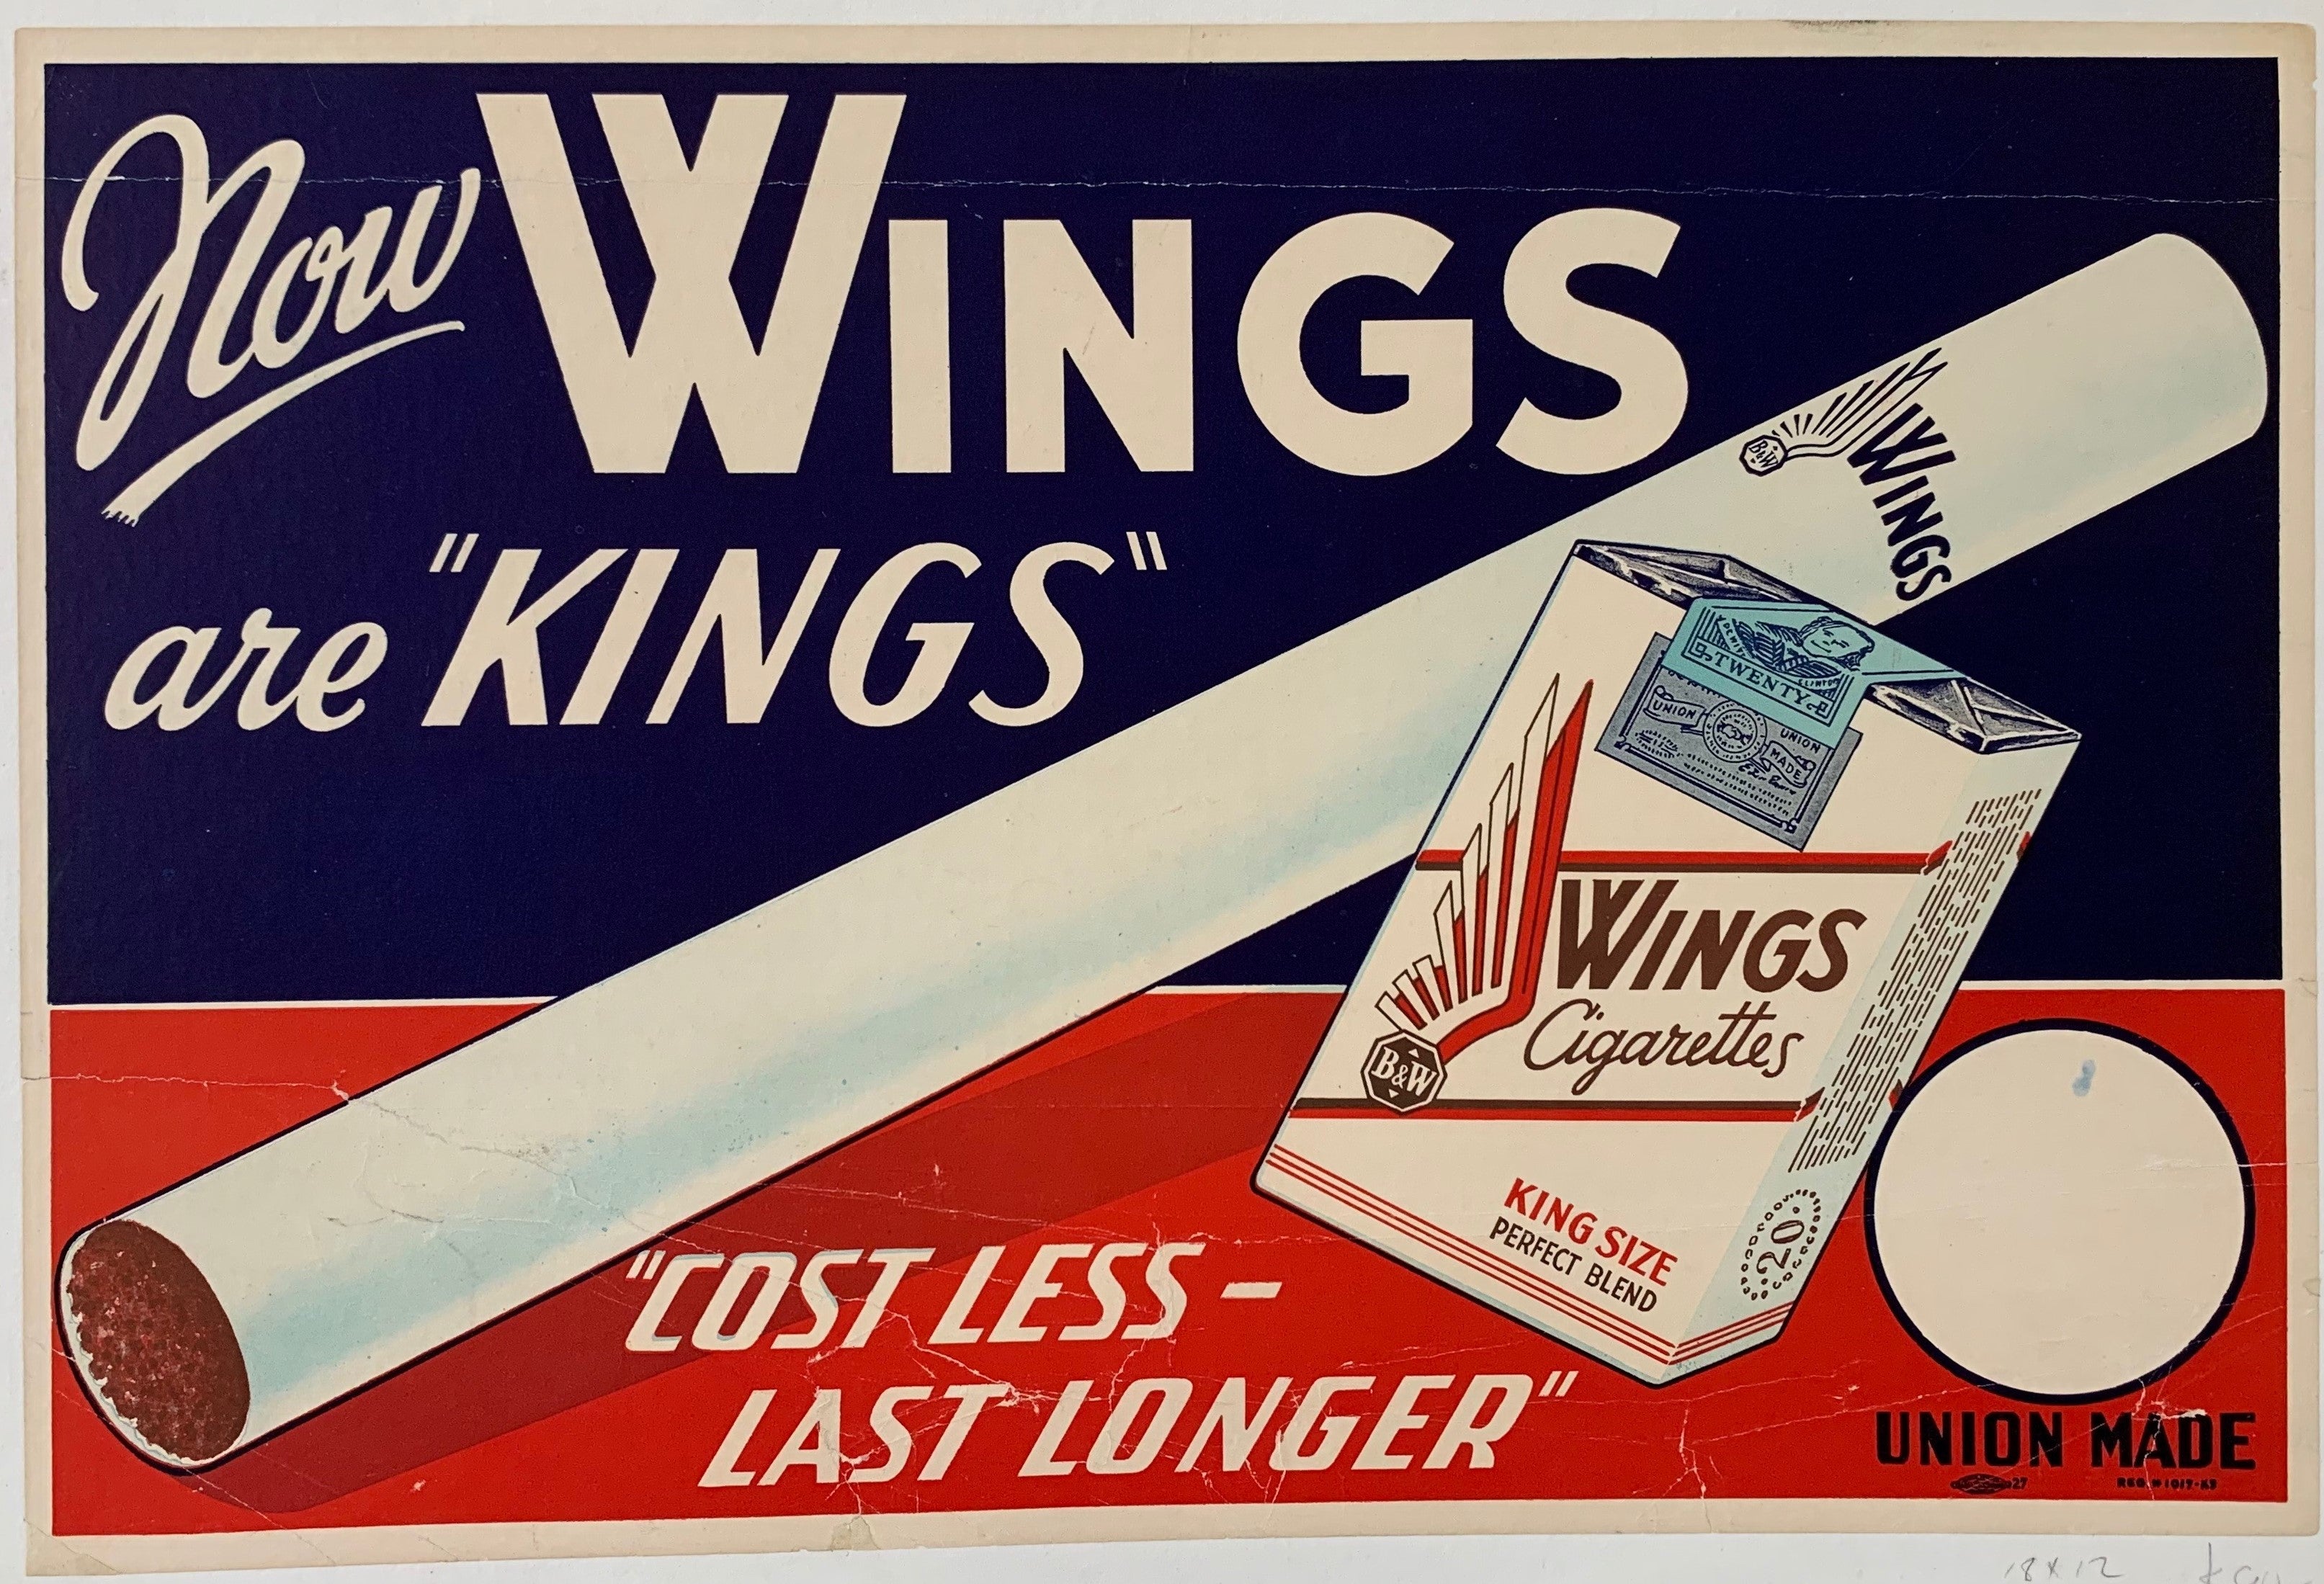 Now Wings are "Kings"